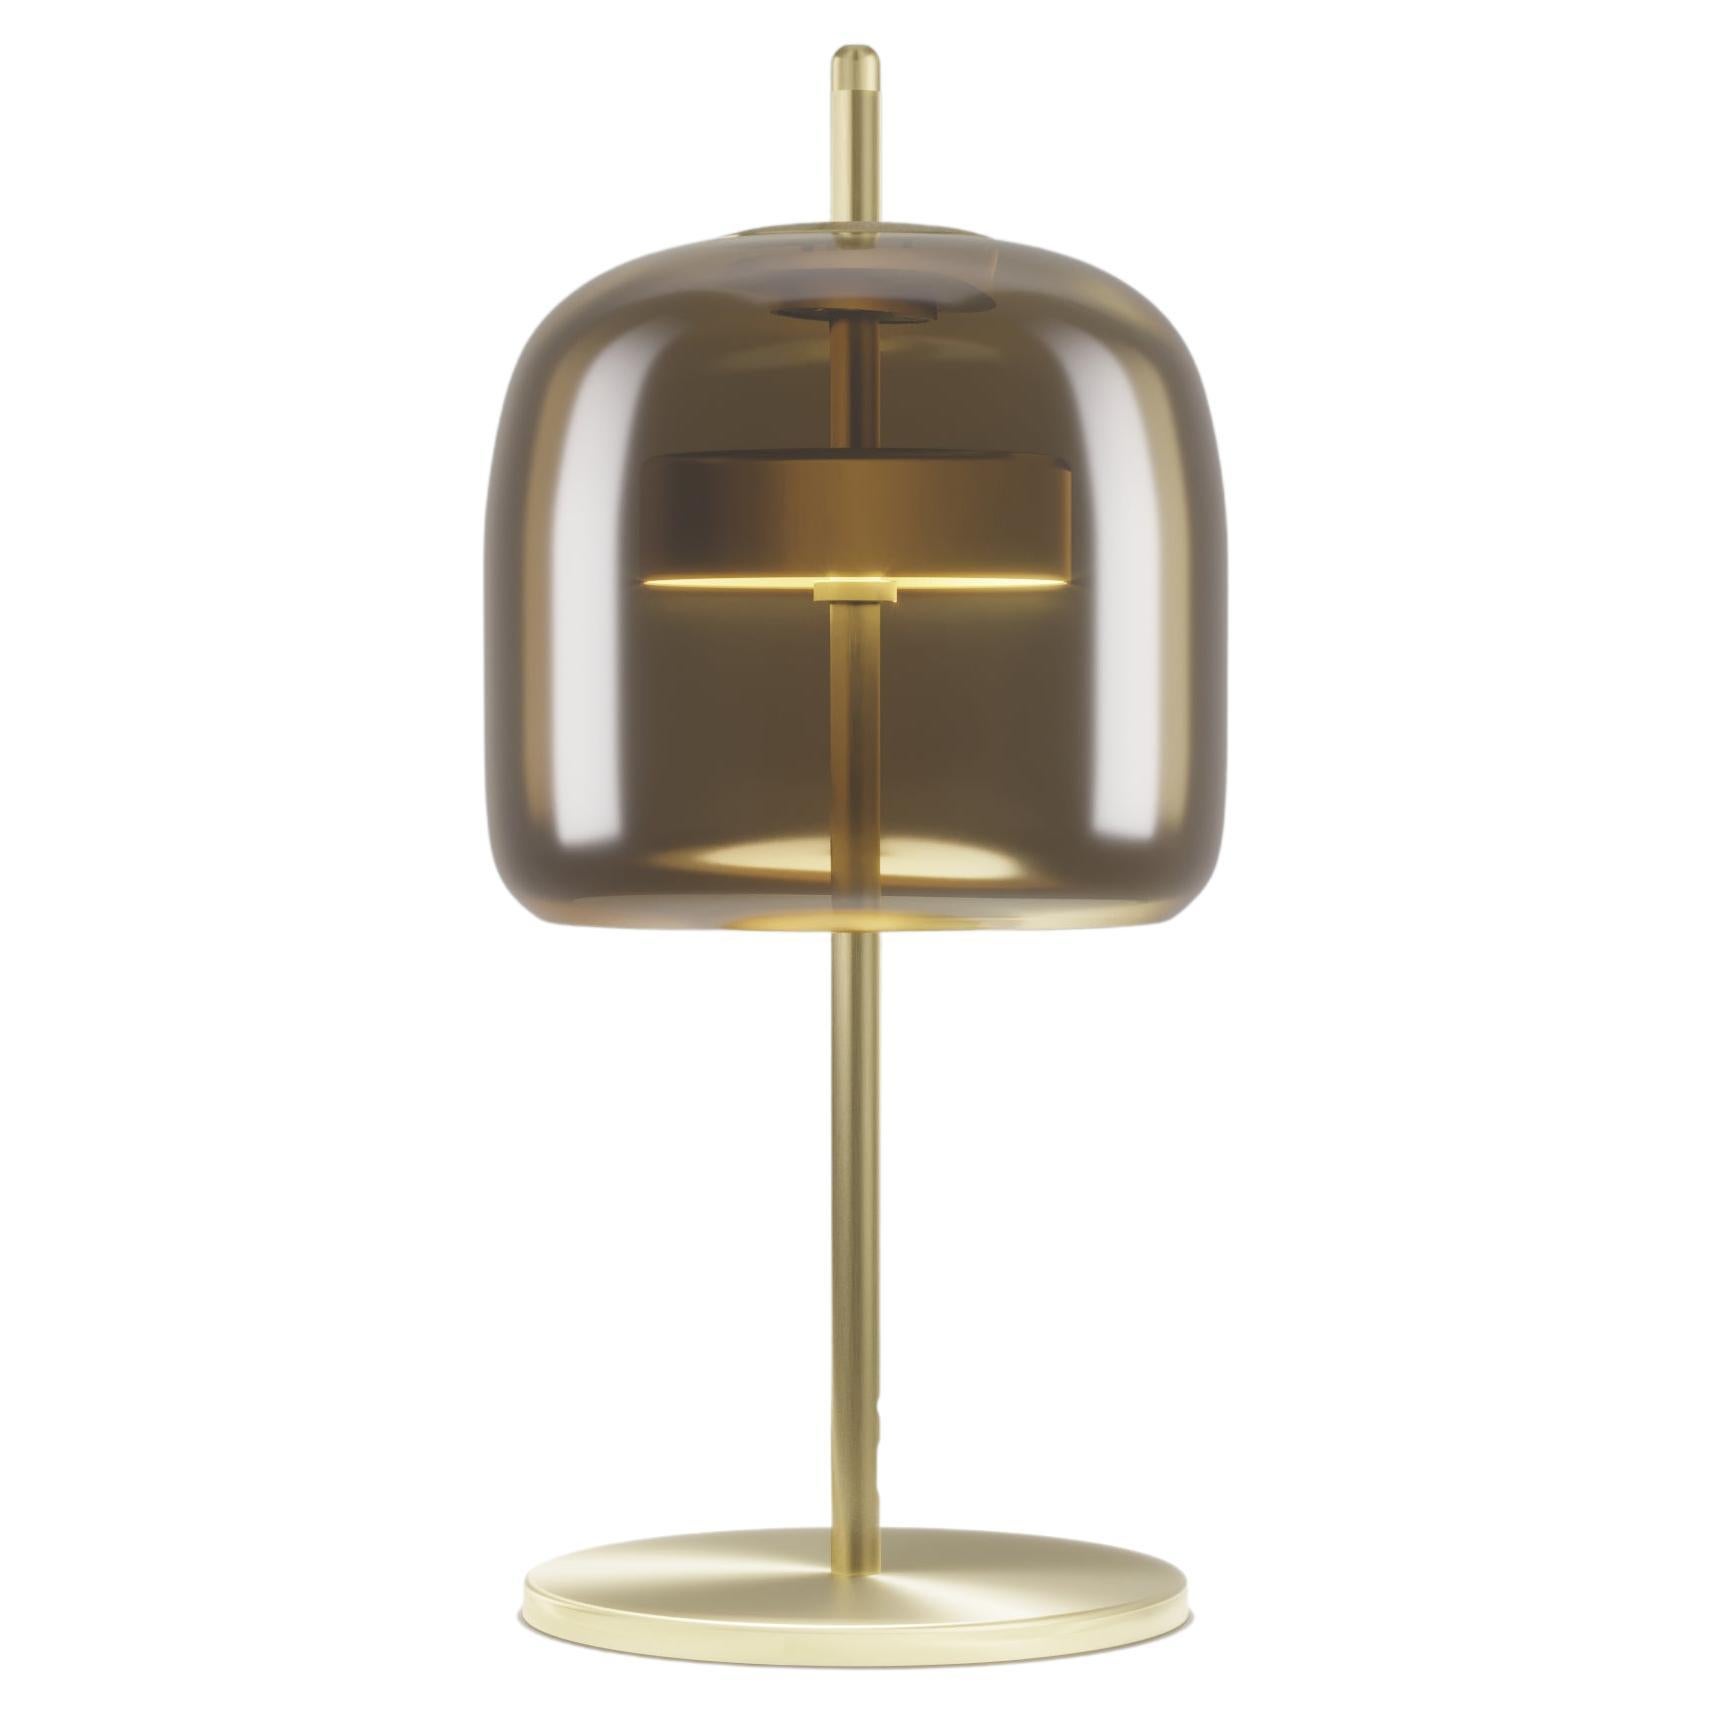 Vistosi Jube Table Lamp in Burned Earth Transparent Glass And Matt Gold Finish